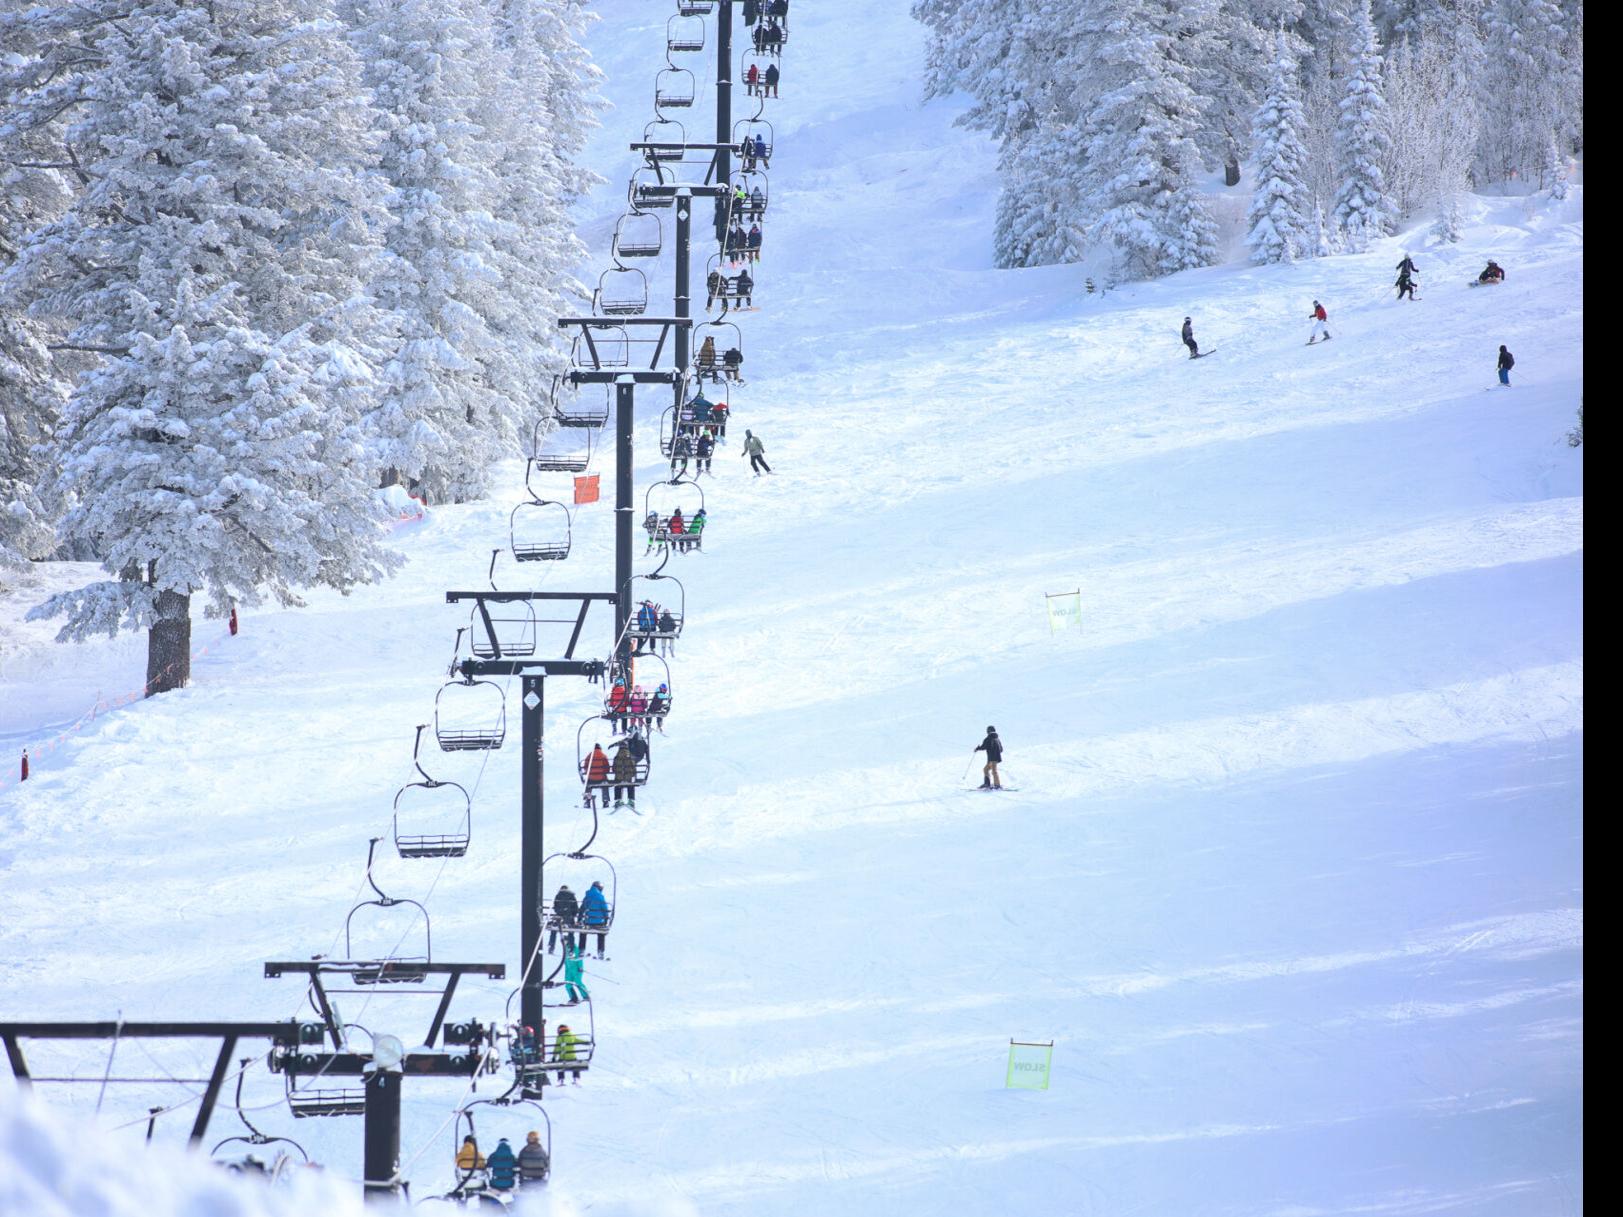 Pebble Creek Ski Area poised for huge weekend after snowstorm